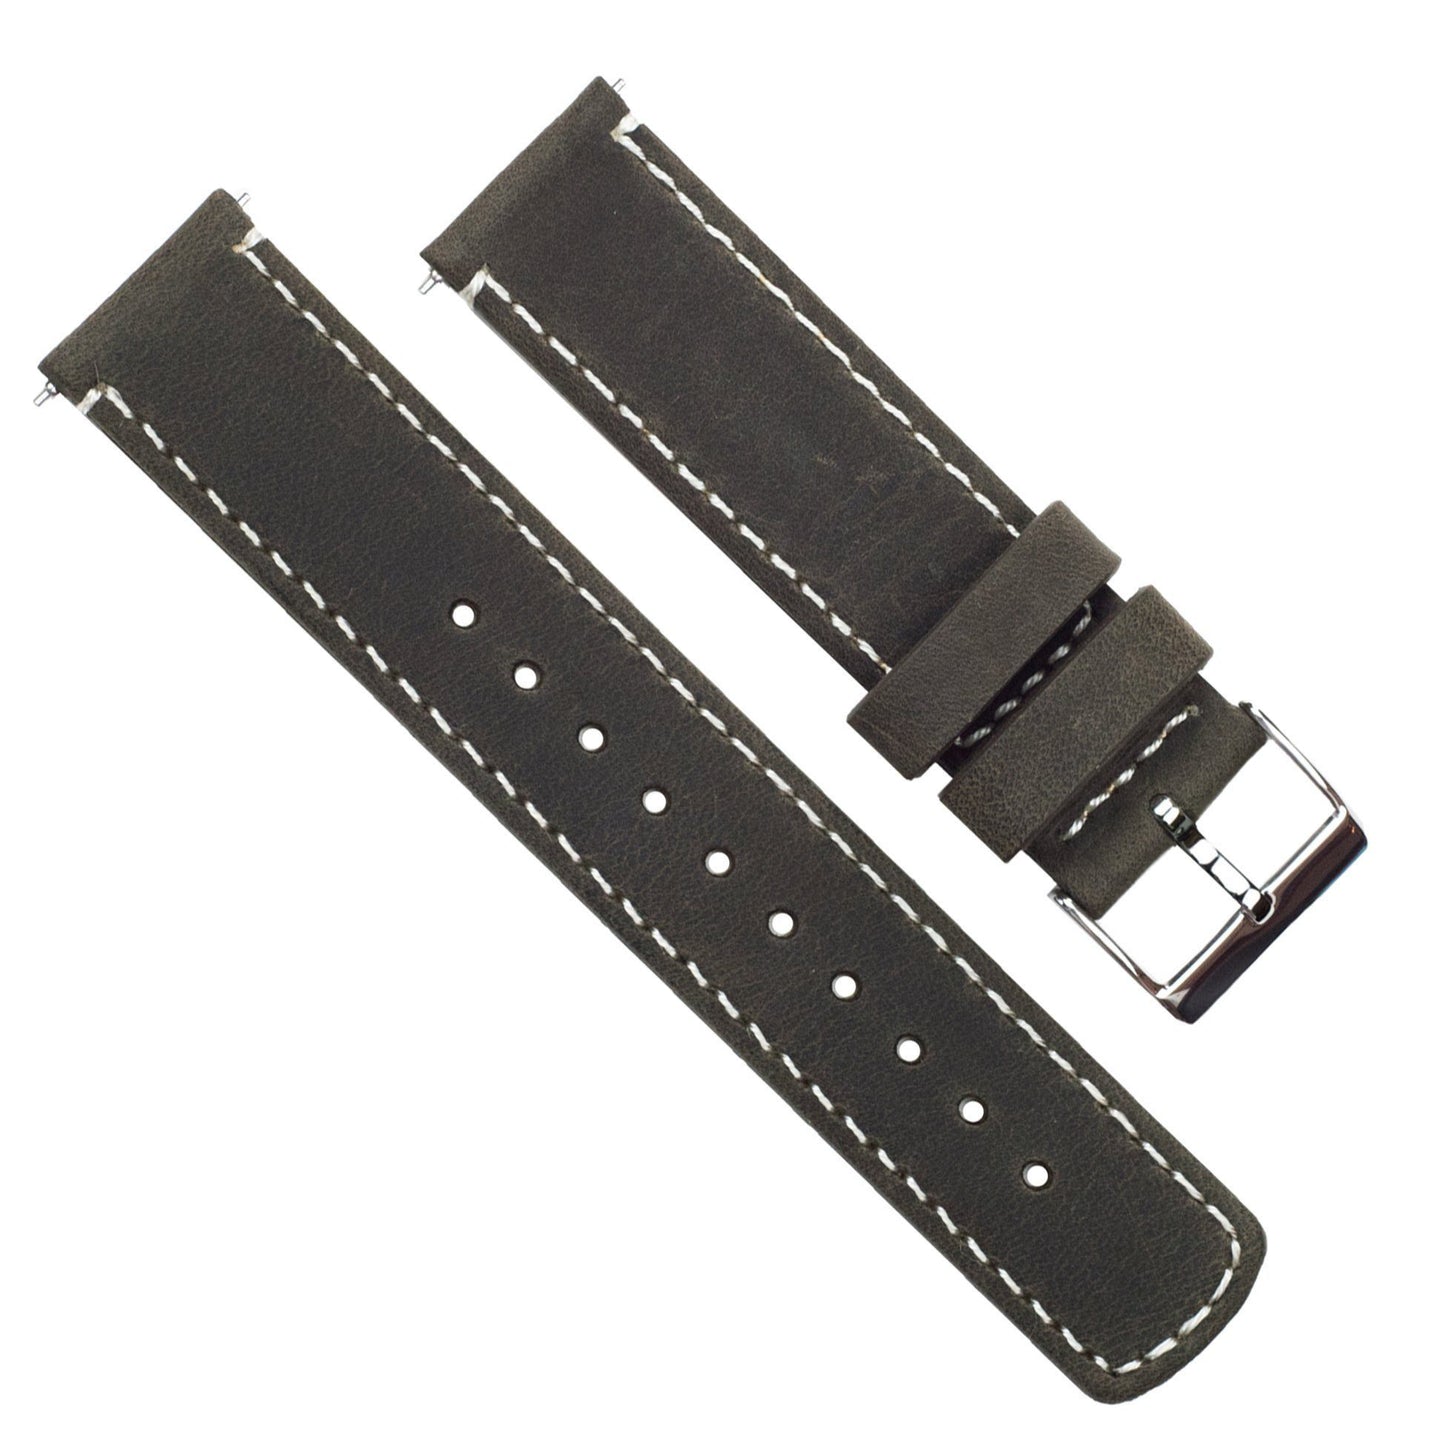 Samsung Galaxy Watch Active | Espresso Brown Leather & Linen White Stitching - Barton Watch Bands